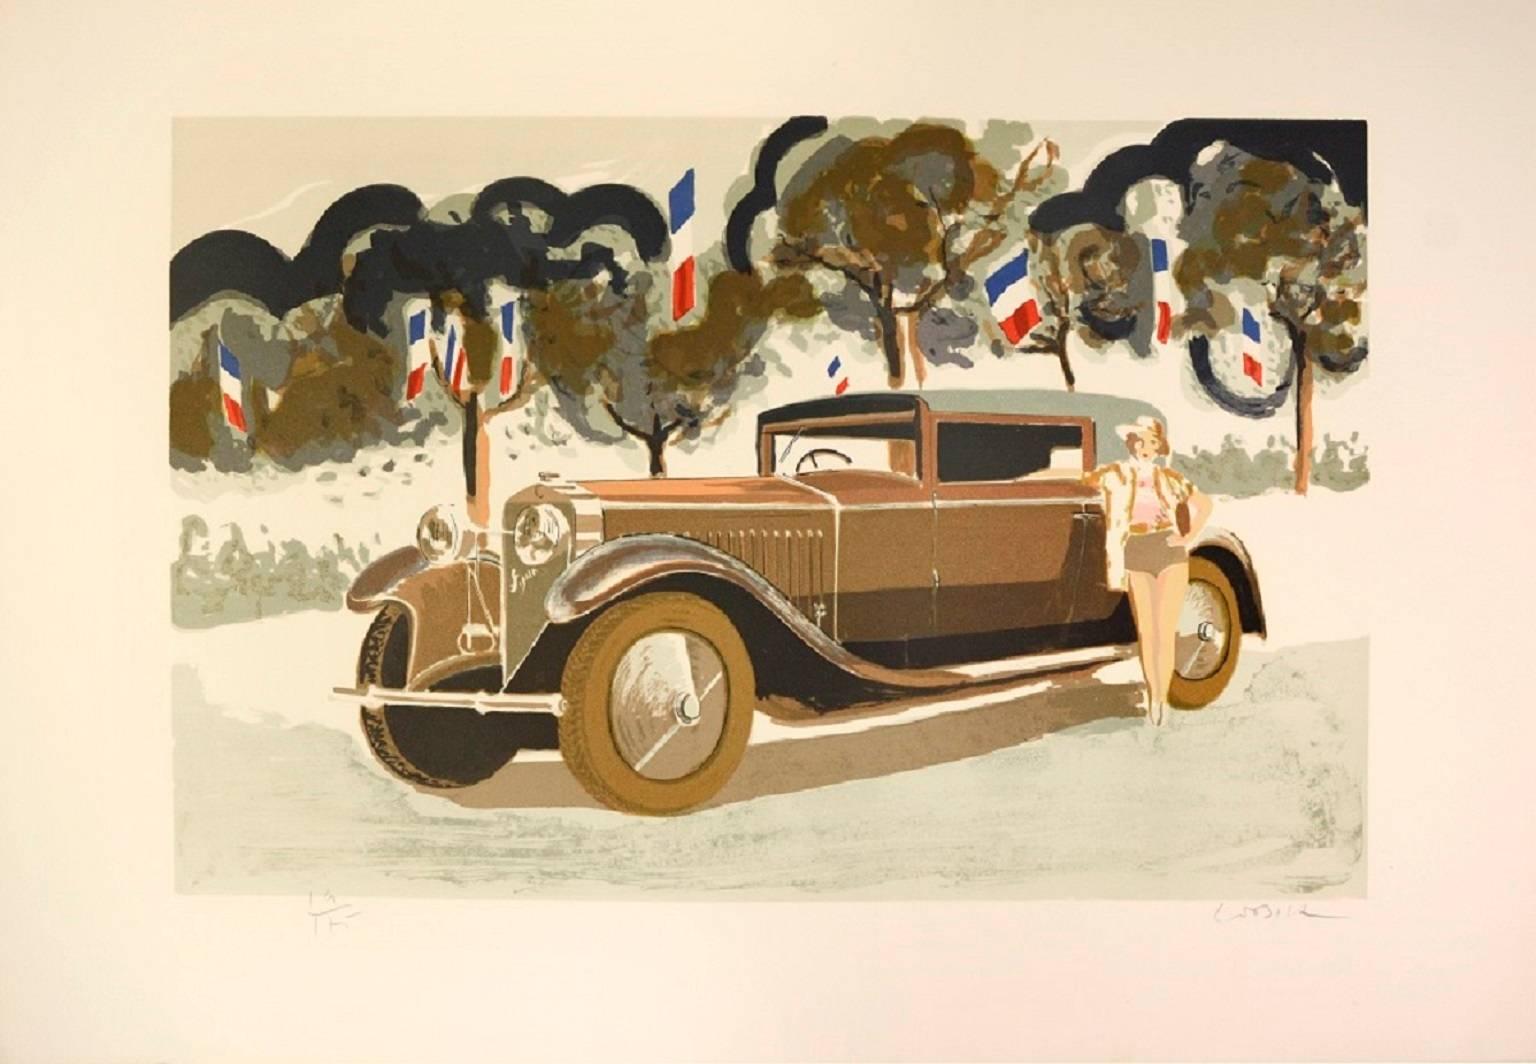 Art Deco style Car and Woman  - Print by Lebier, Daniel